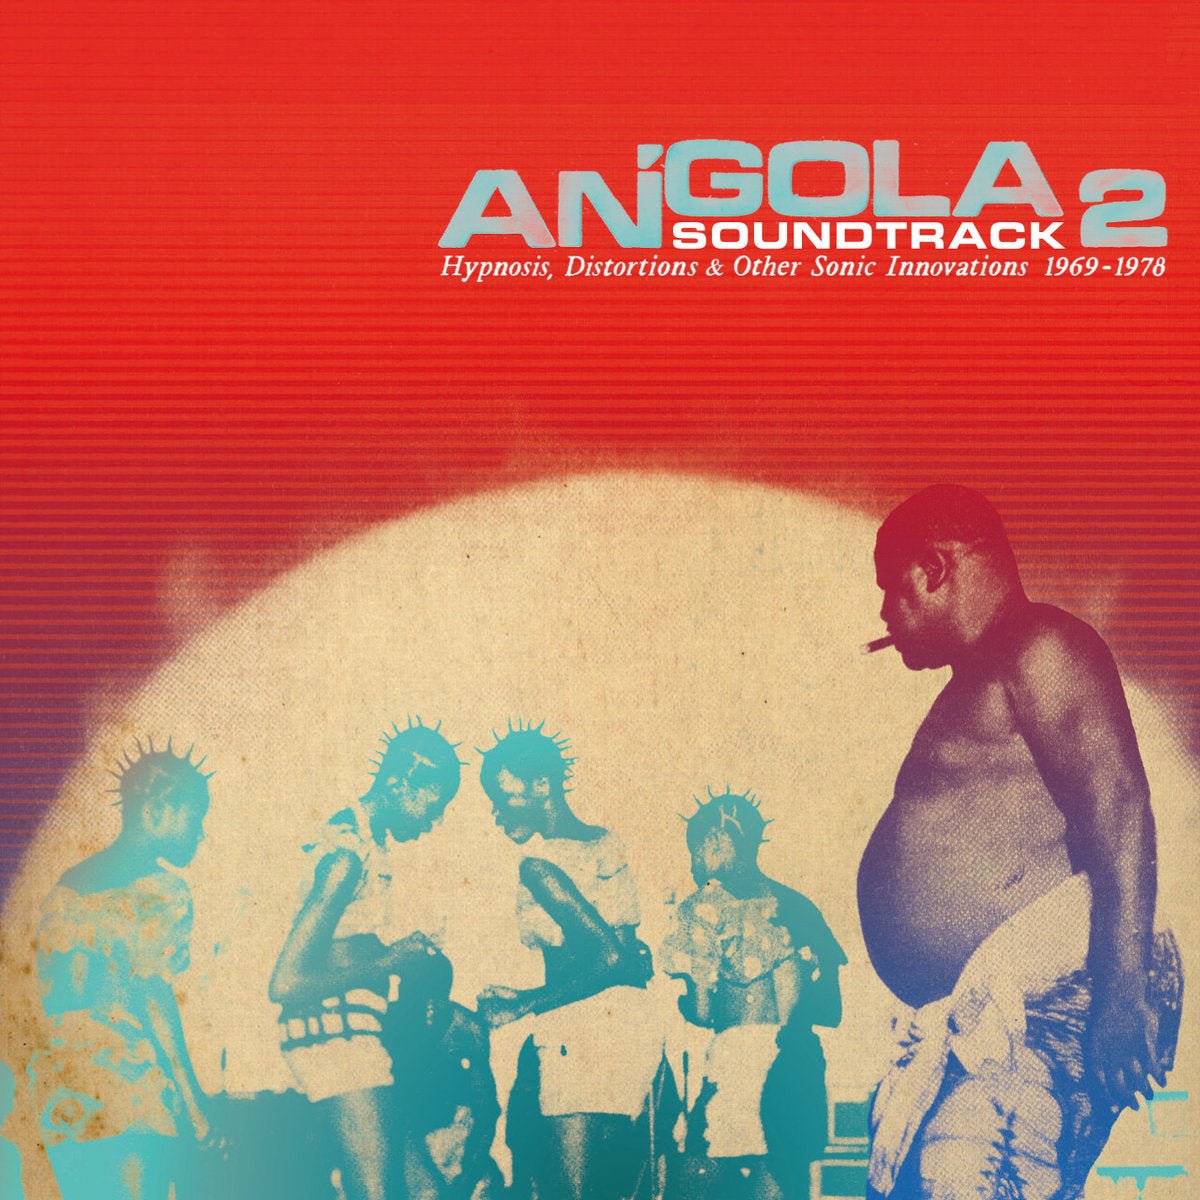 Angola Soundtrack 2 - 33RPM